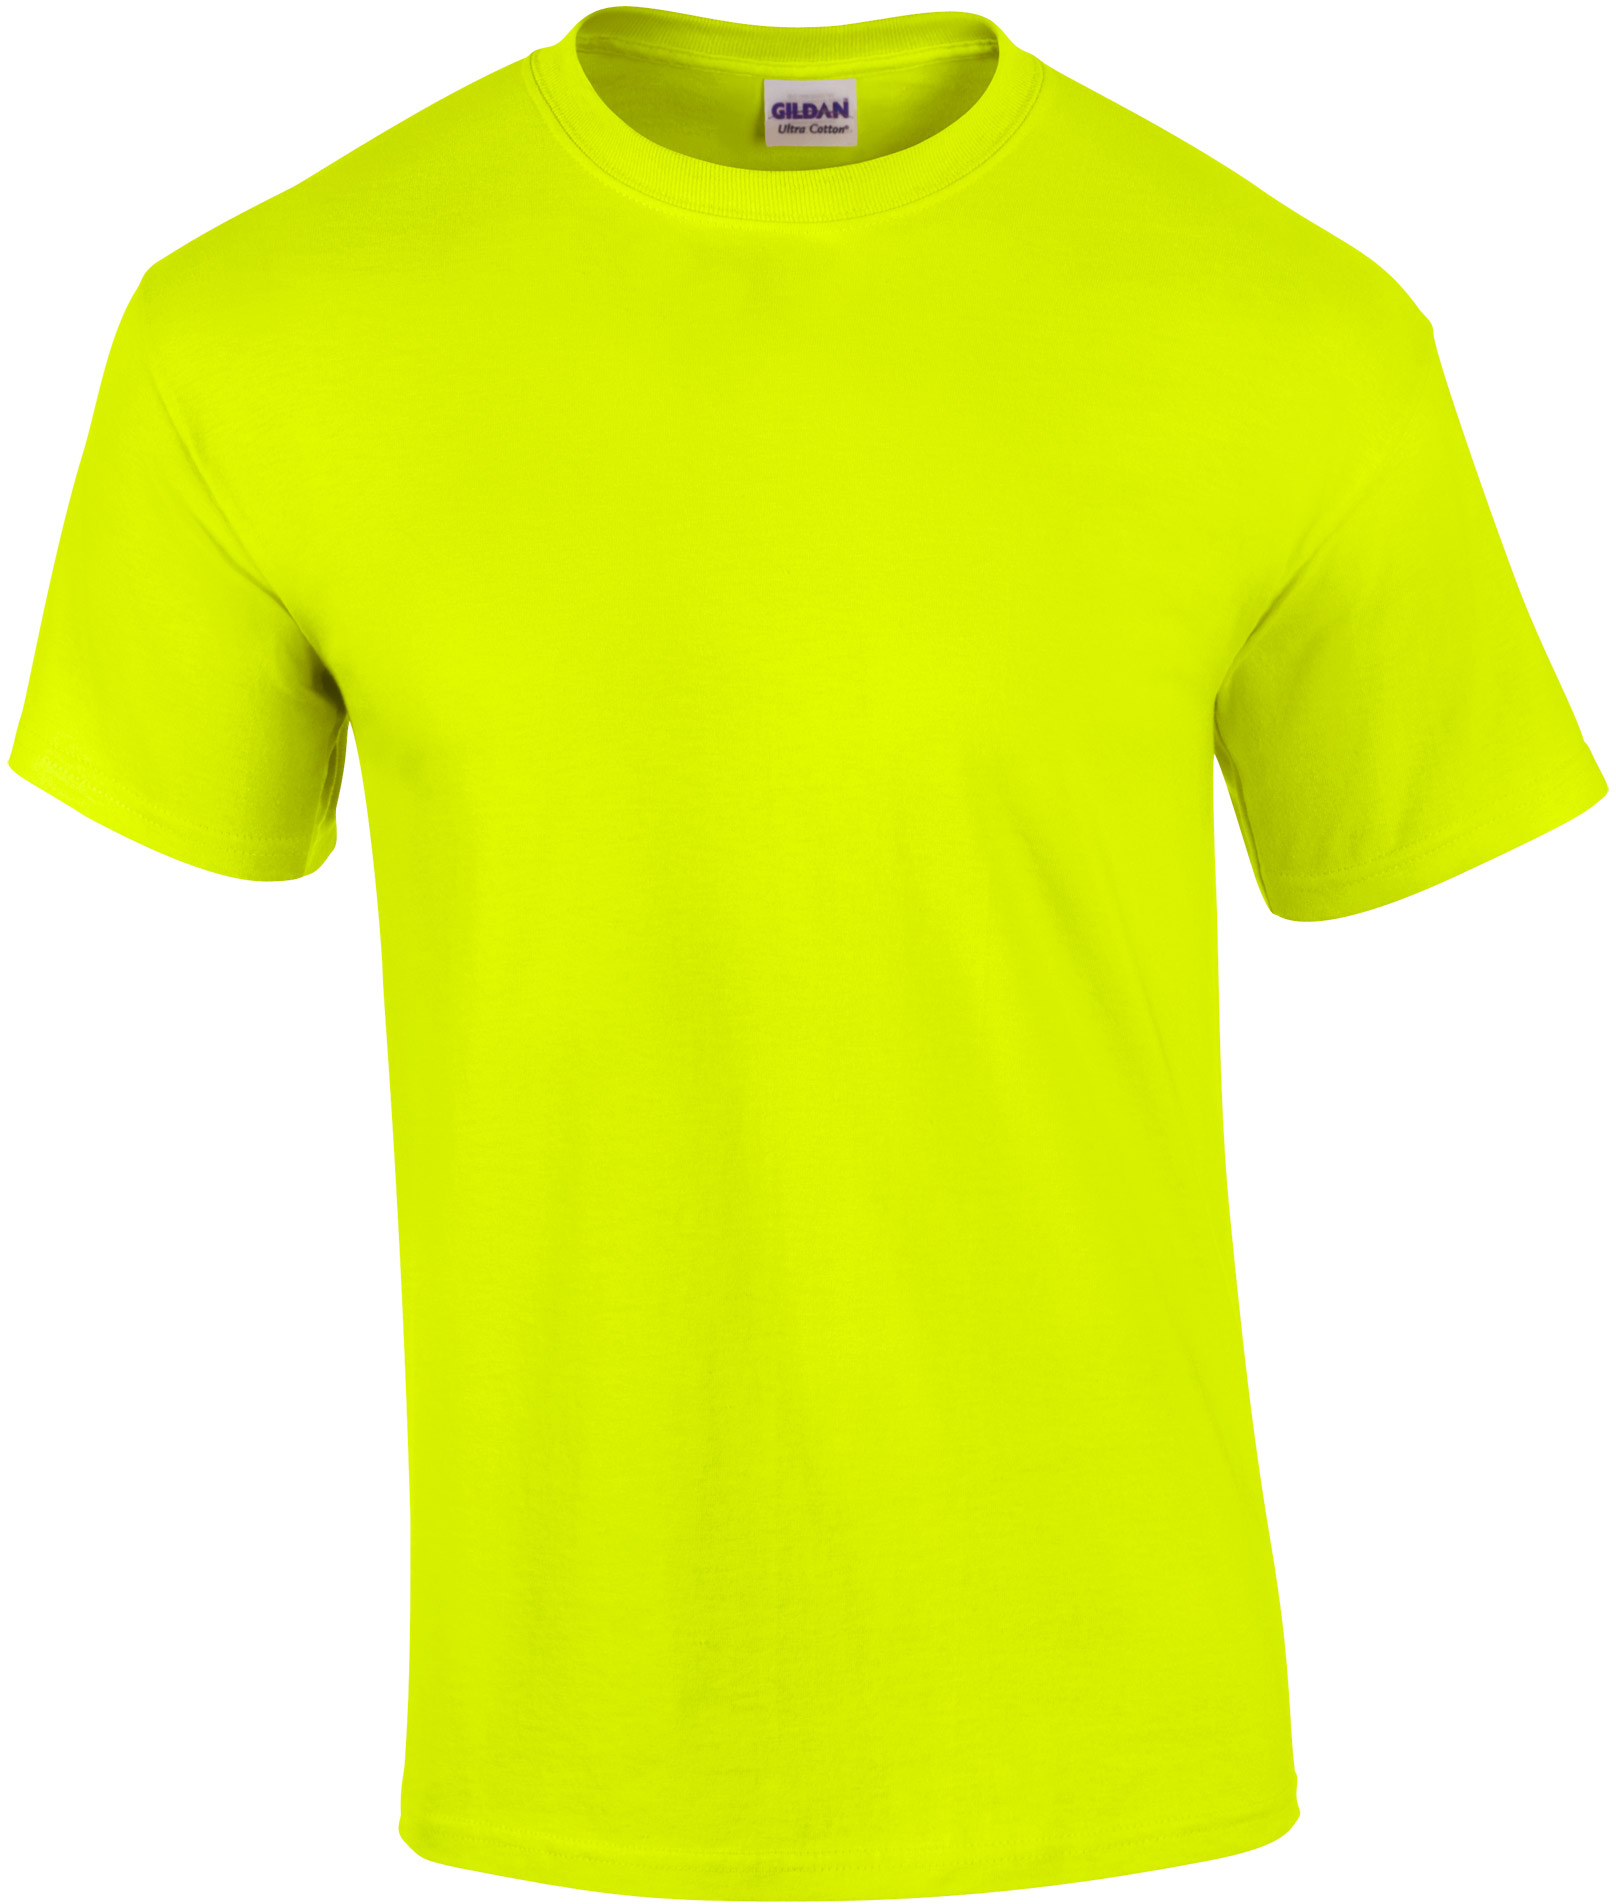 Tričko Gildan Ultra - Neonová žlutá L